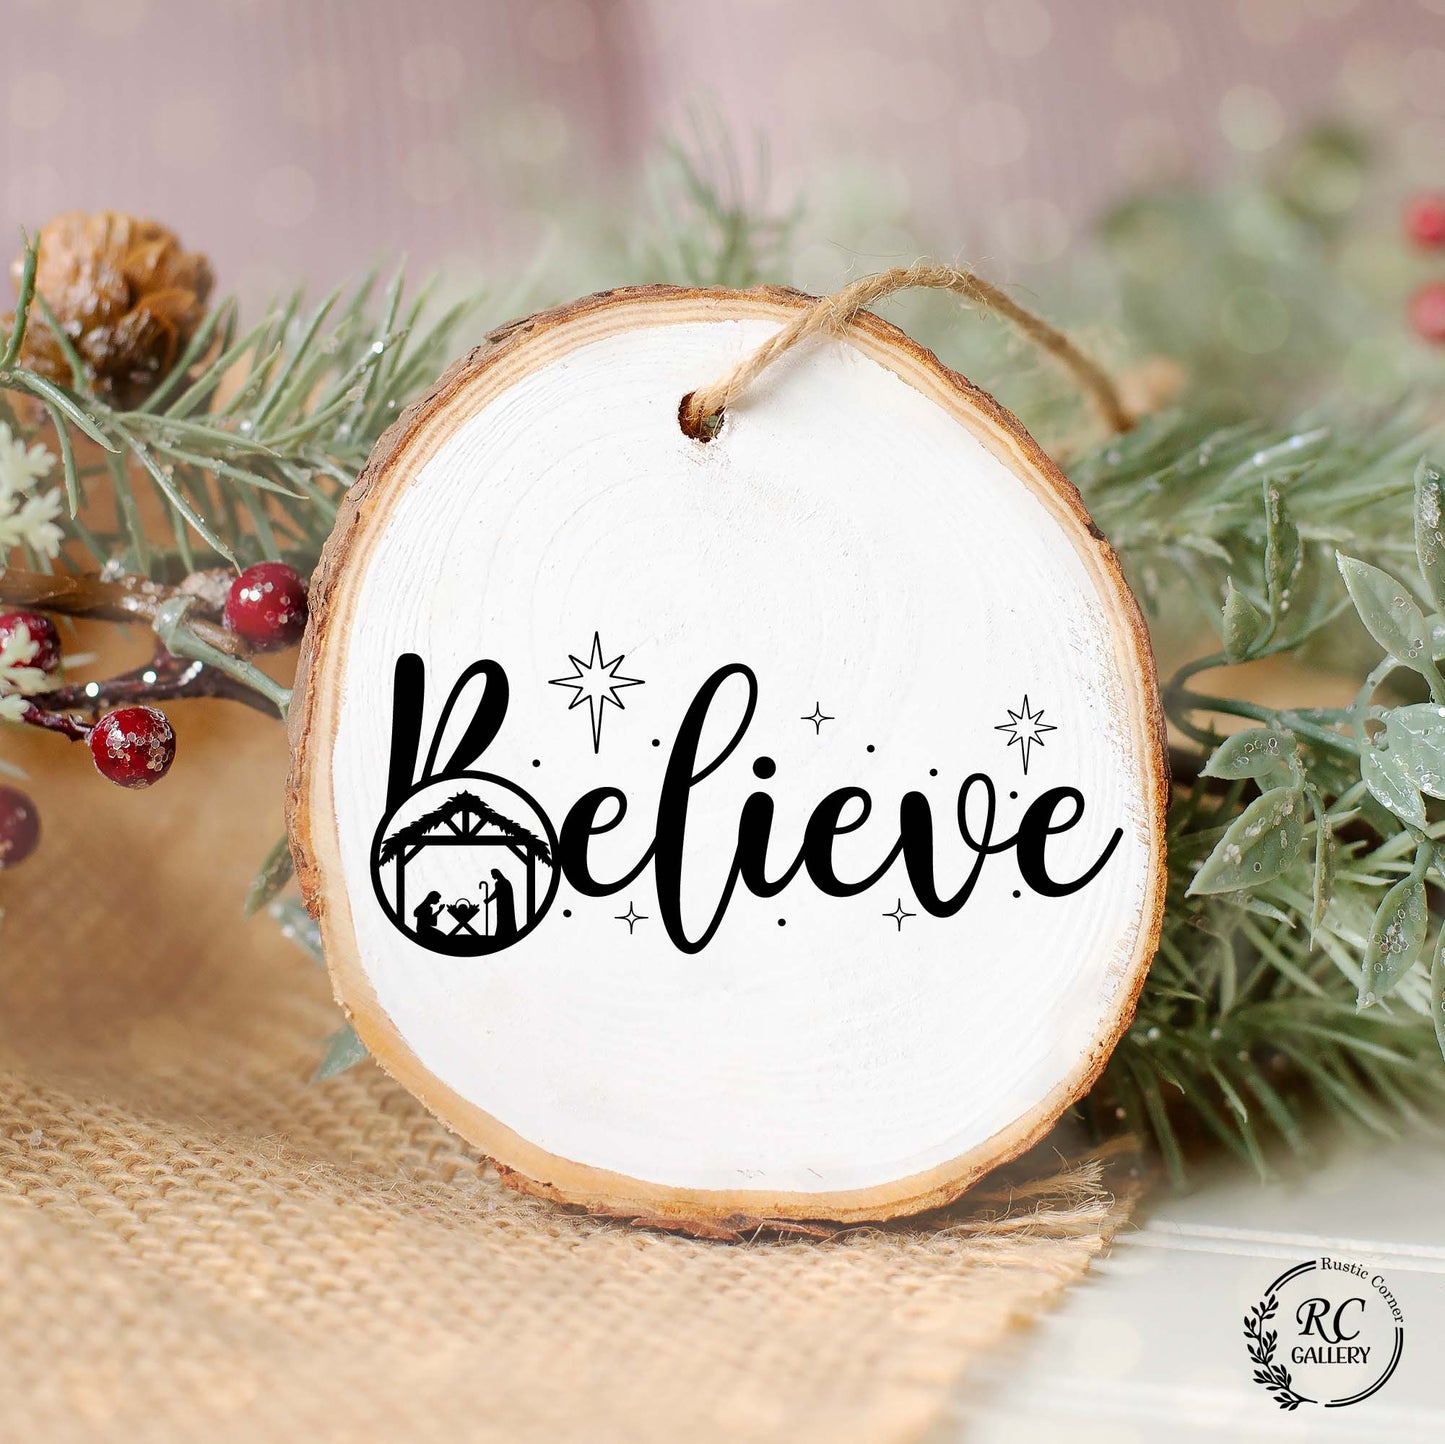 Believe wood slice ornament, Christmas ornament.